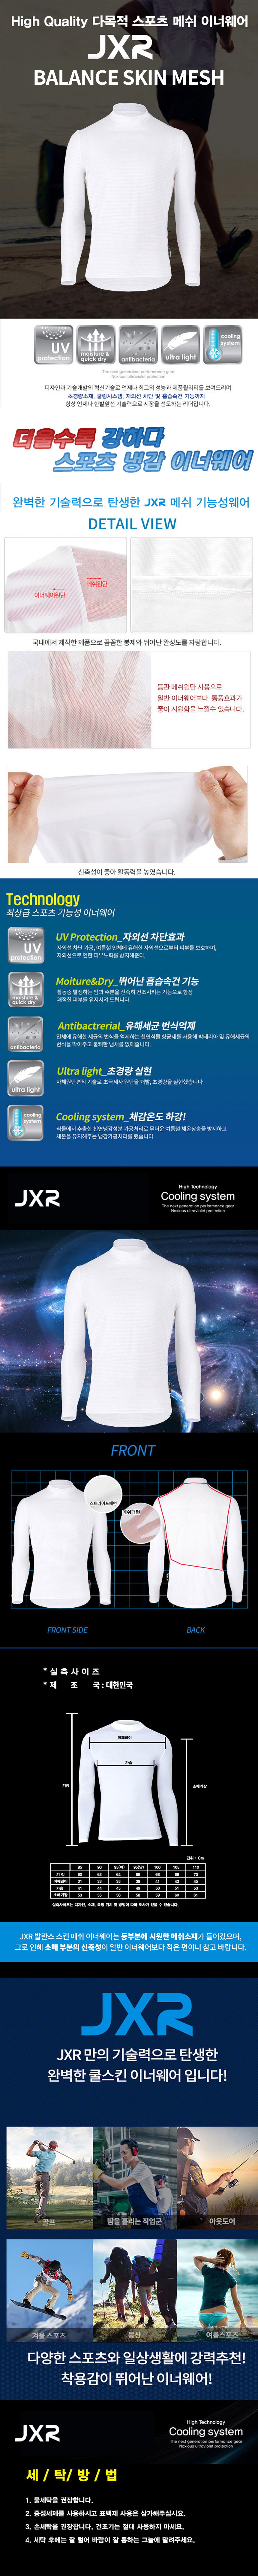 jxr_iceskin_balance_innerwear_high_quality_19.jpg